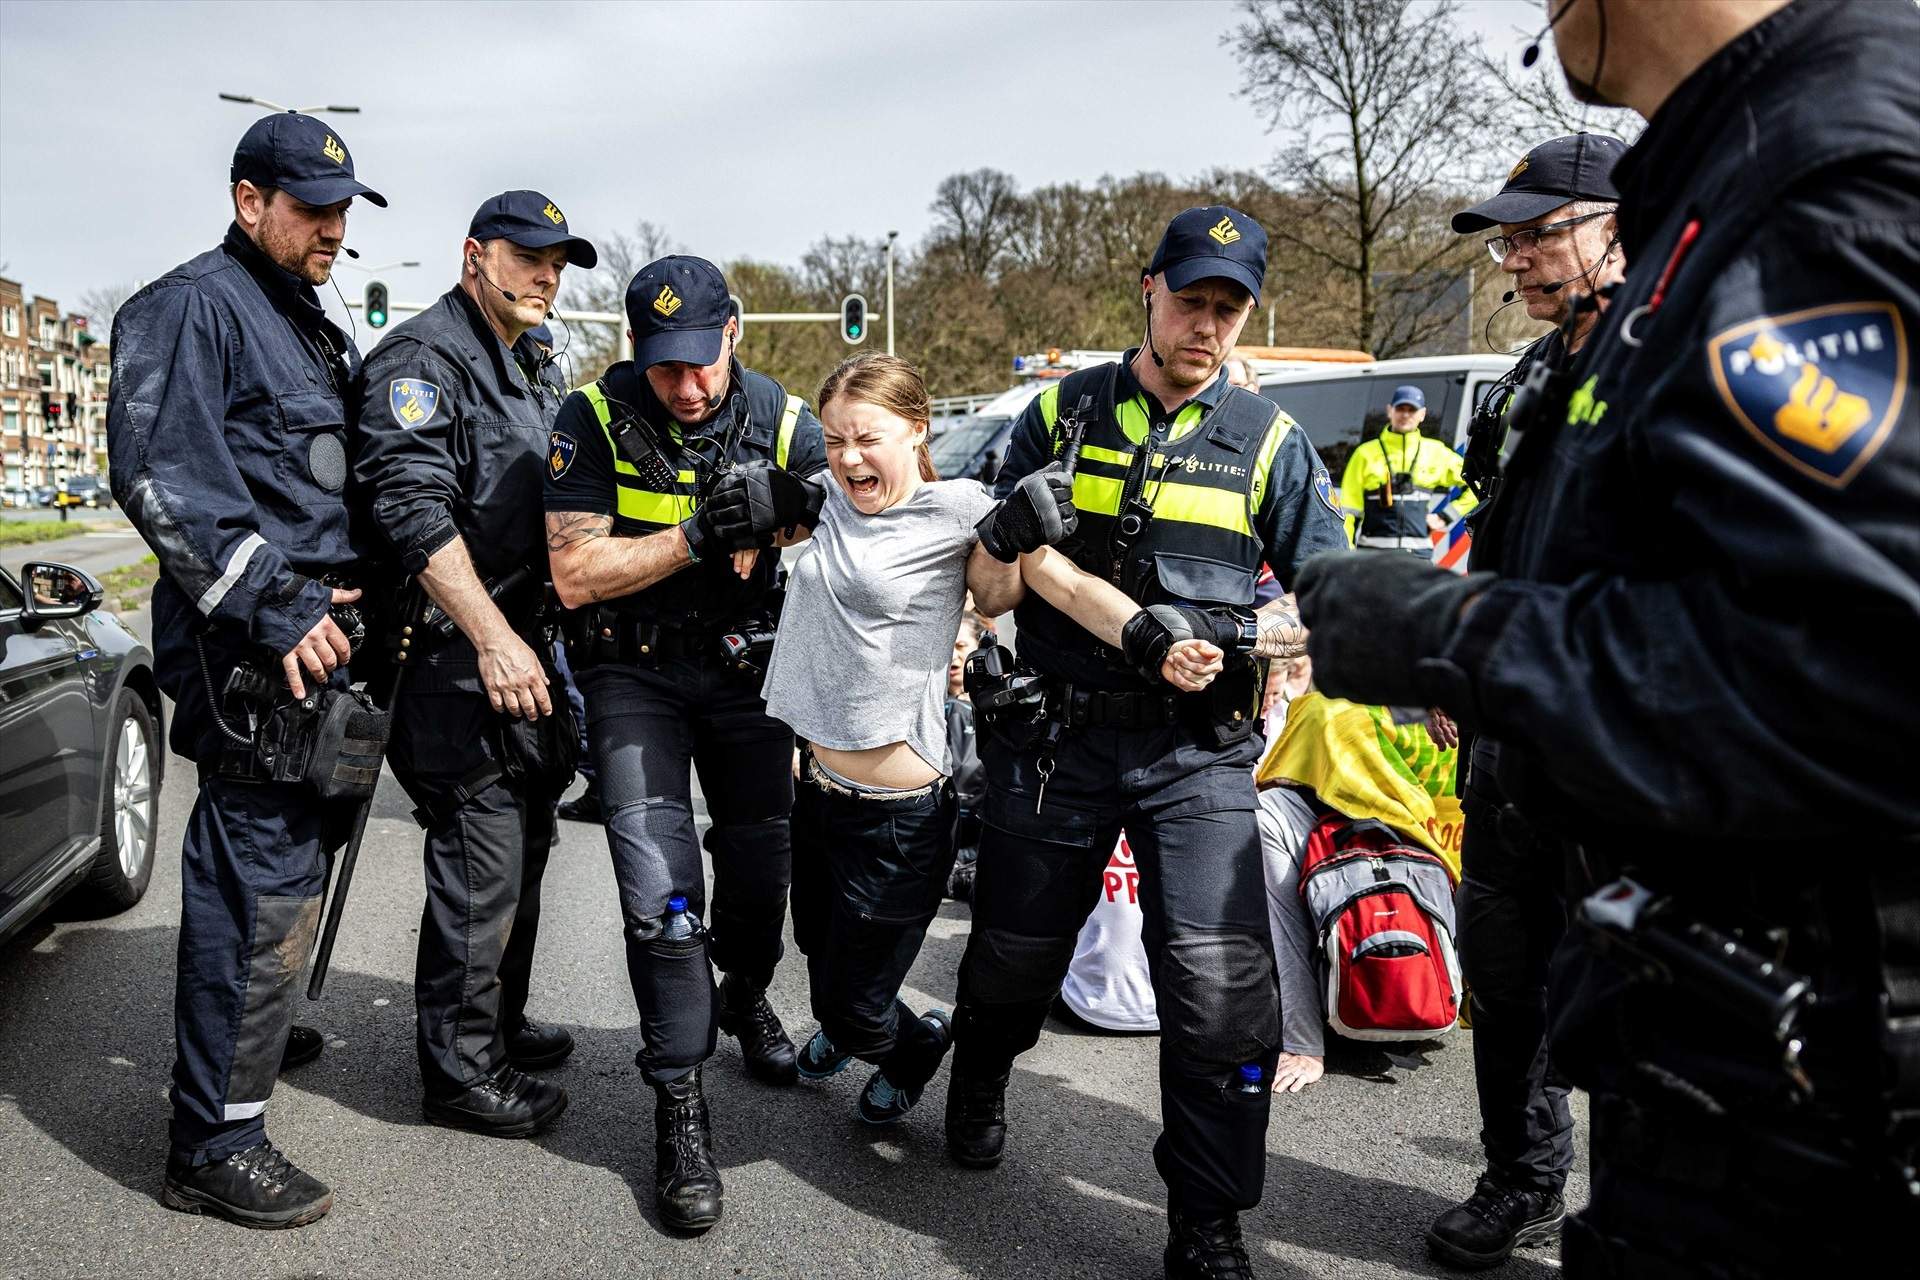 Greta Thunberg, detinguda durant una protesta ecologista als Països Baixos | VÍDEO